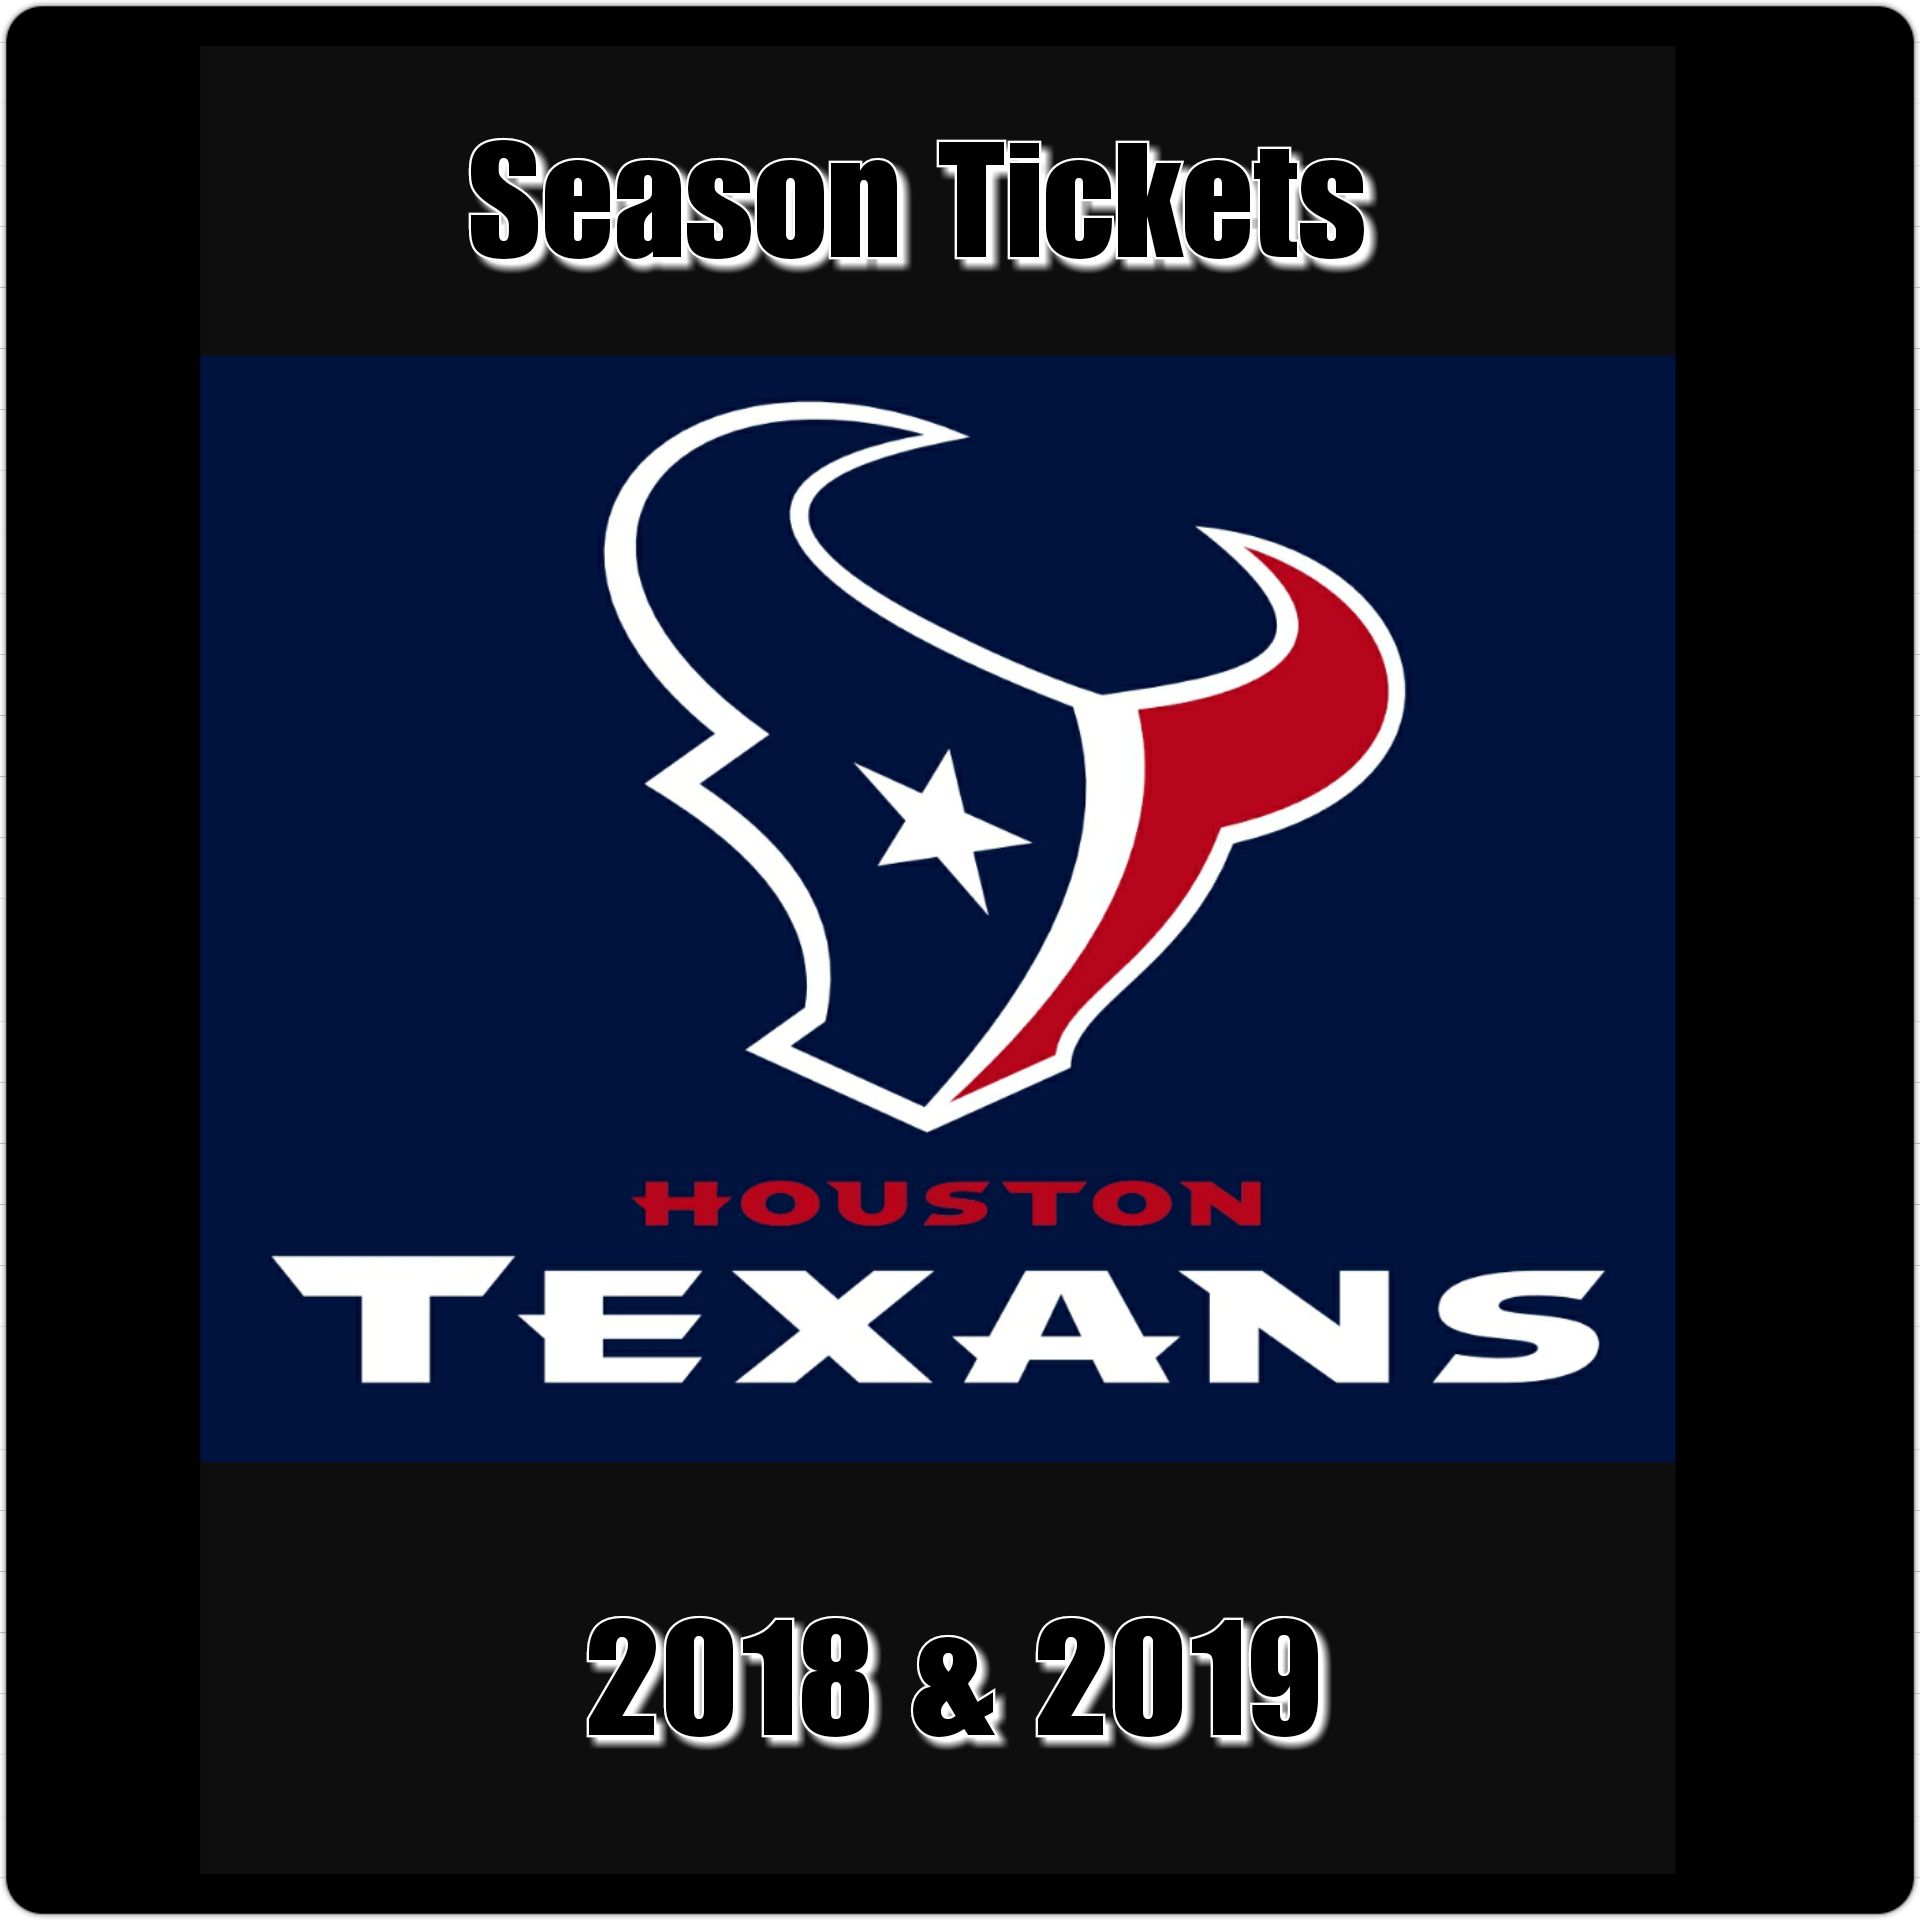 season tickets to texans